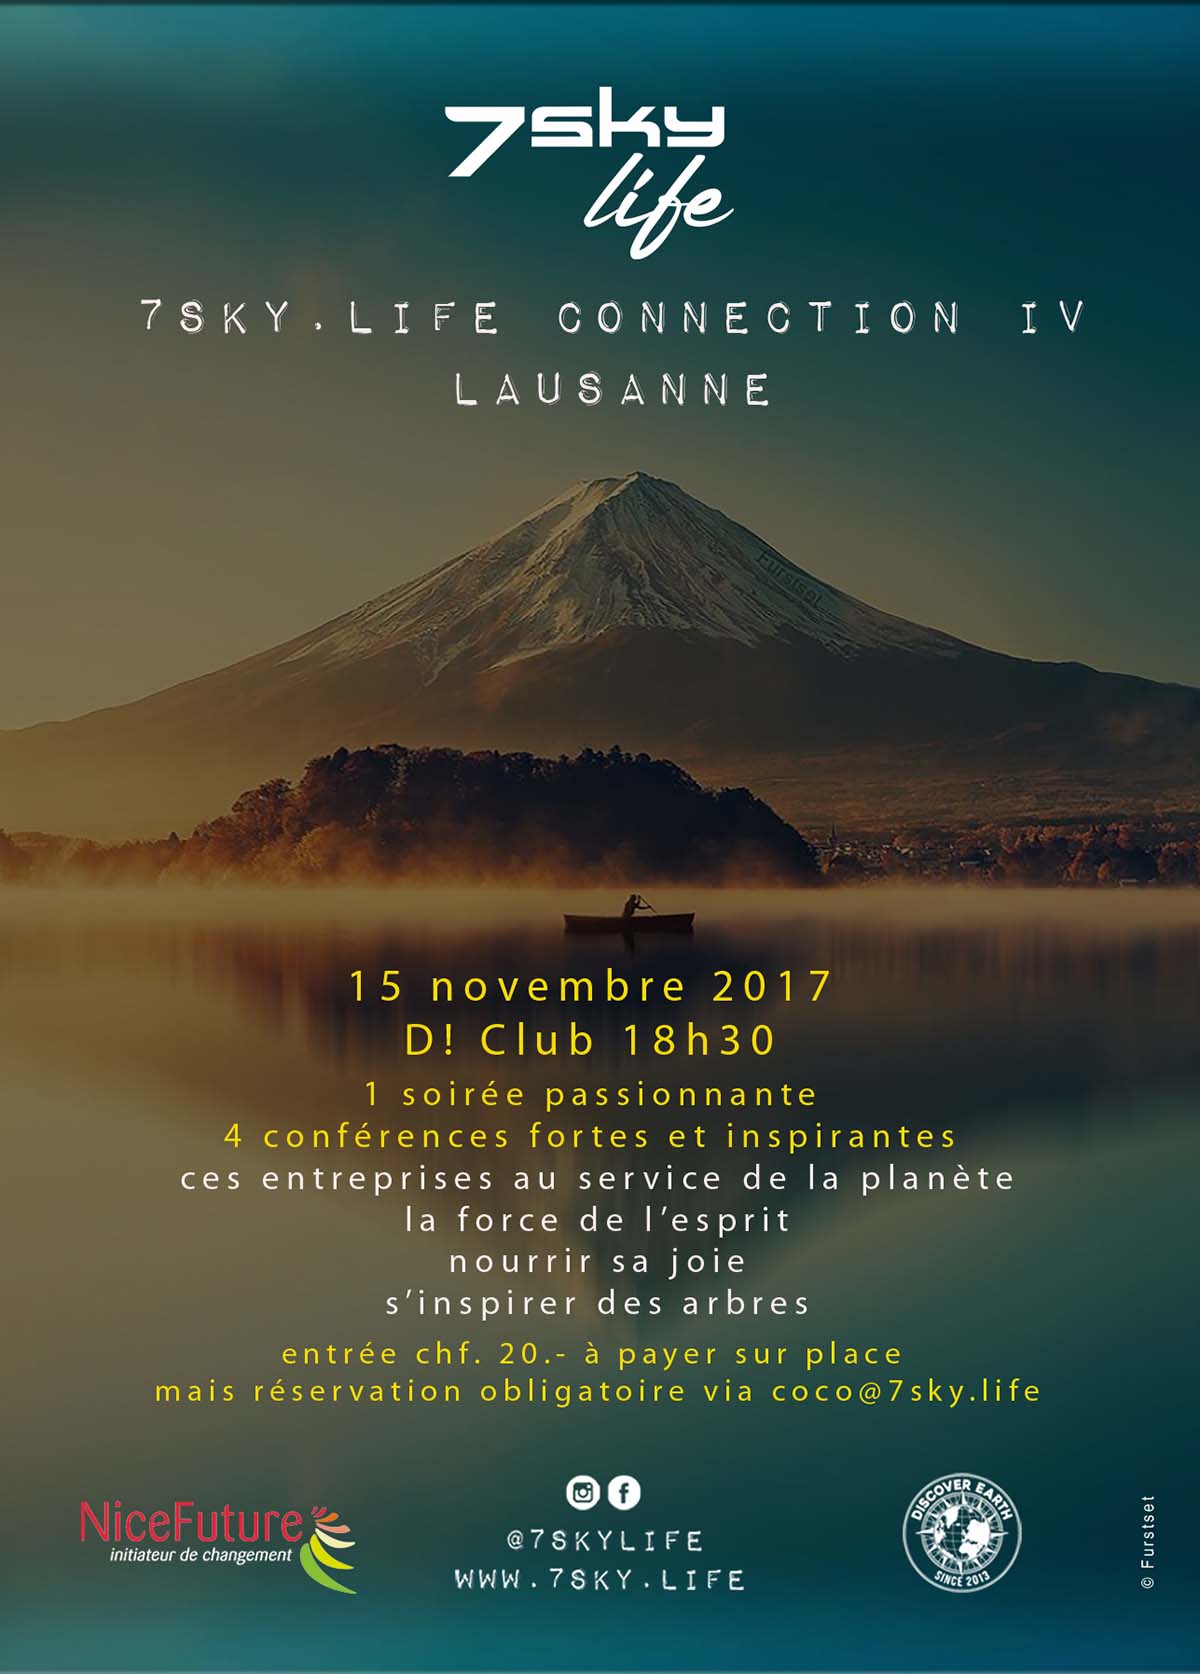 7sky.life Connection IV Lausanne | 18h30 D! Club | 15th November 2017